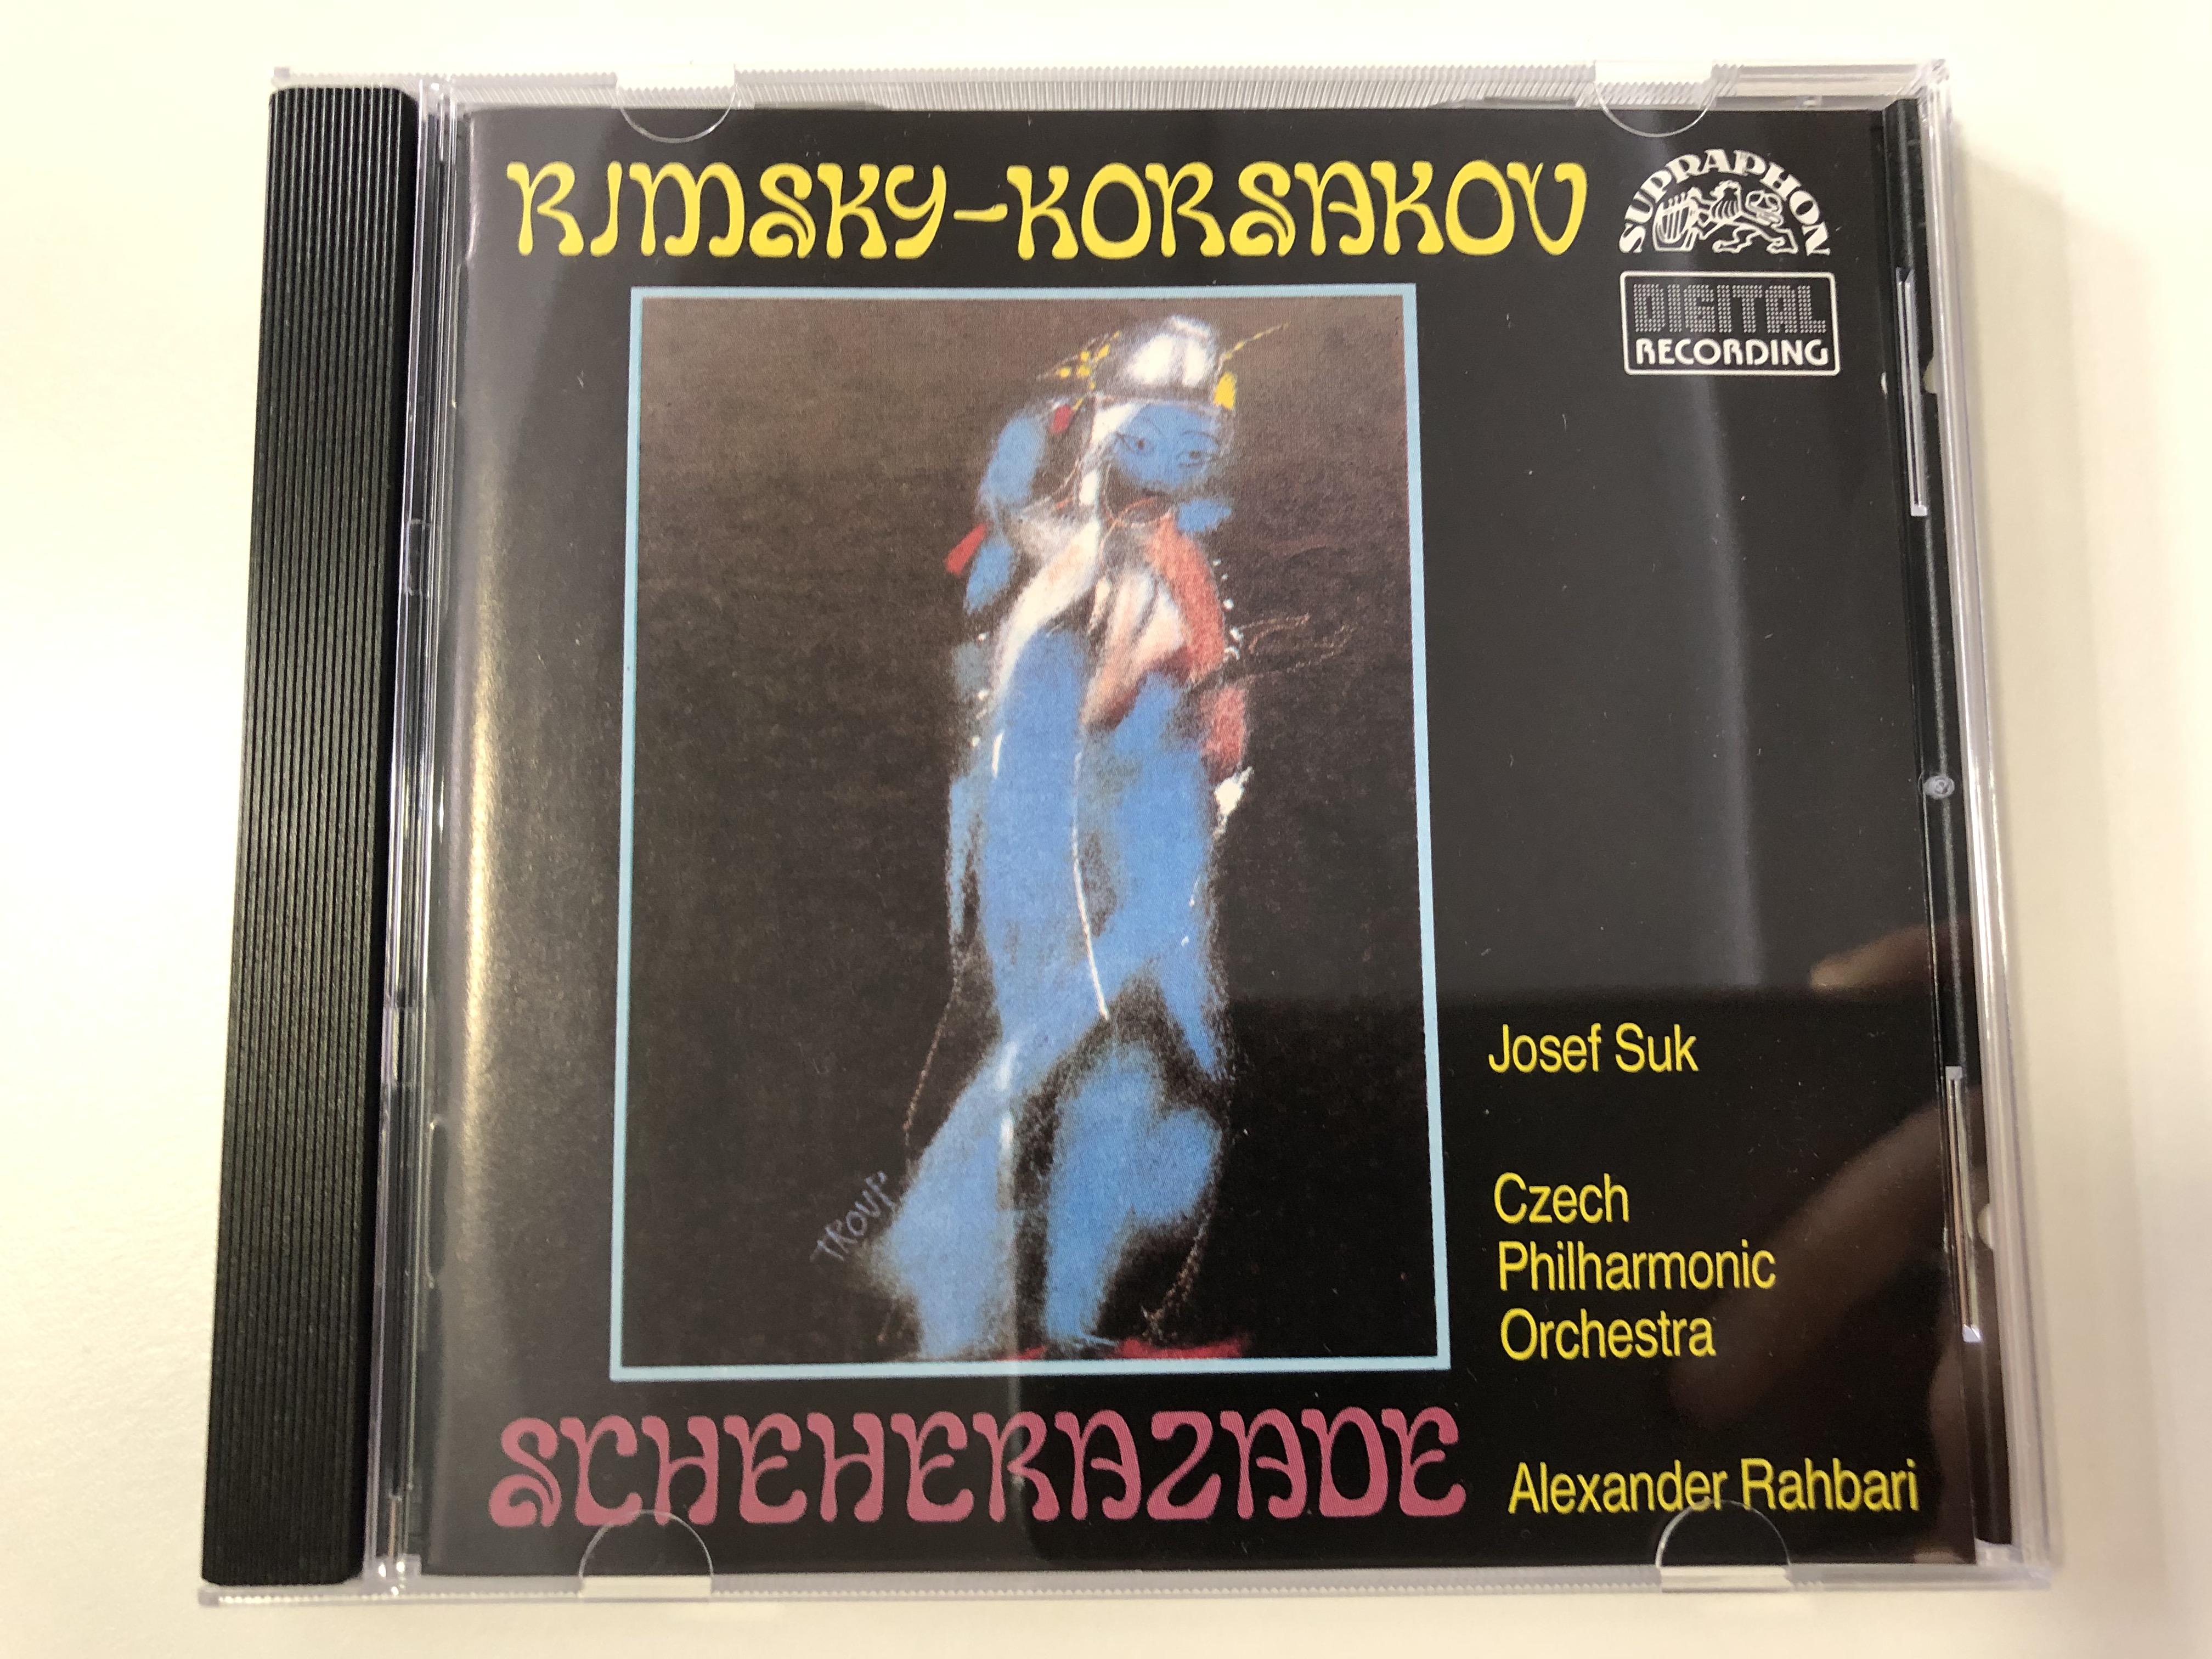 rimsky-korsakov-scheherazade-josef-suk-czech-philharmonic-orchestra-alexander-rahbari-supraphon-audio-cd-1990-stereo-11-0391-2-031-1-.jpg